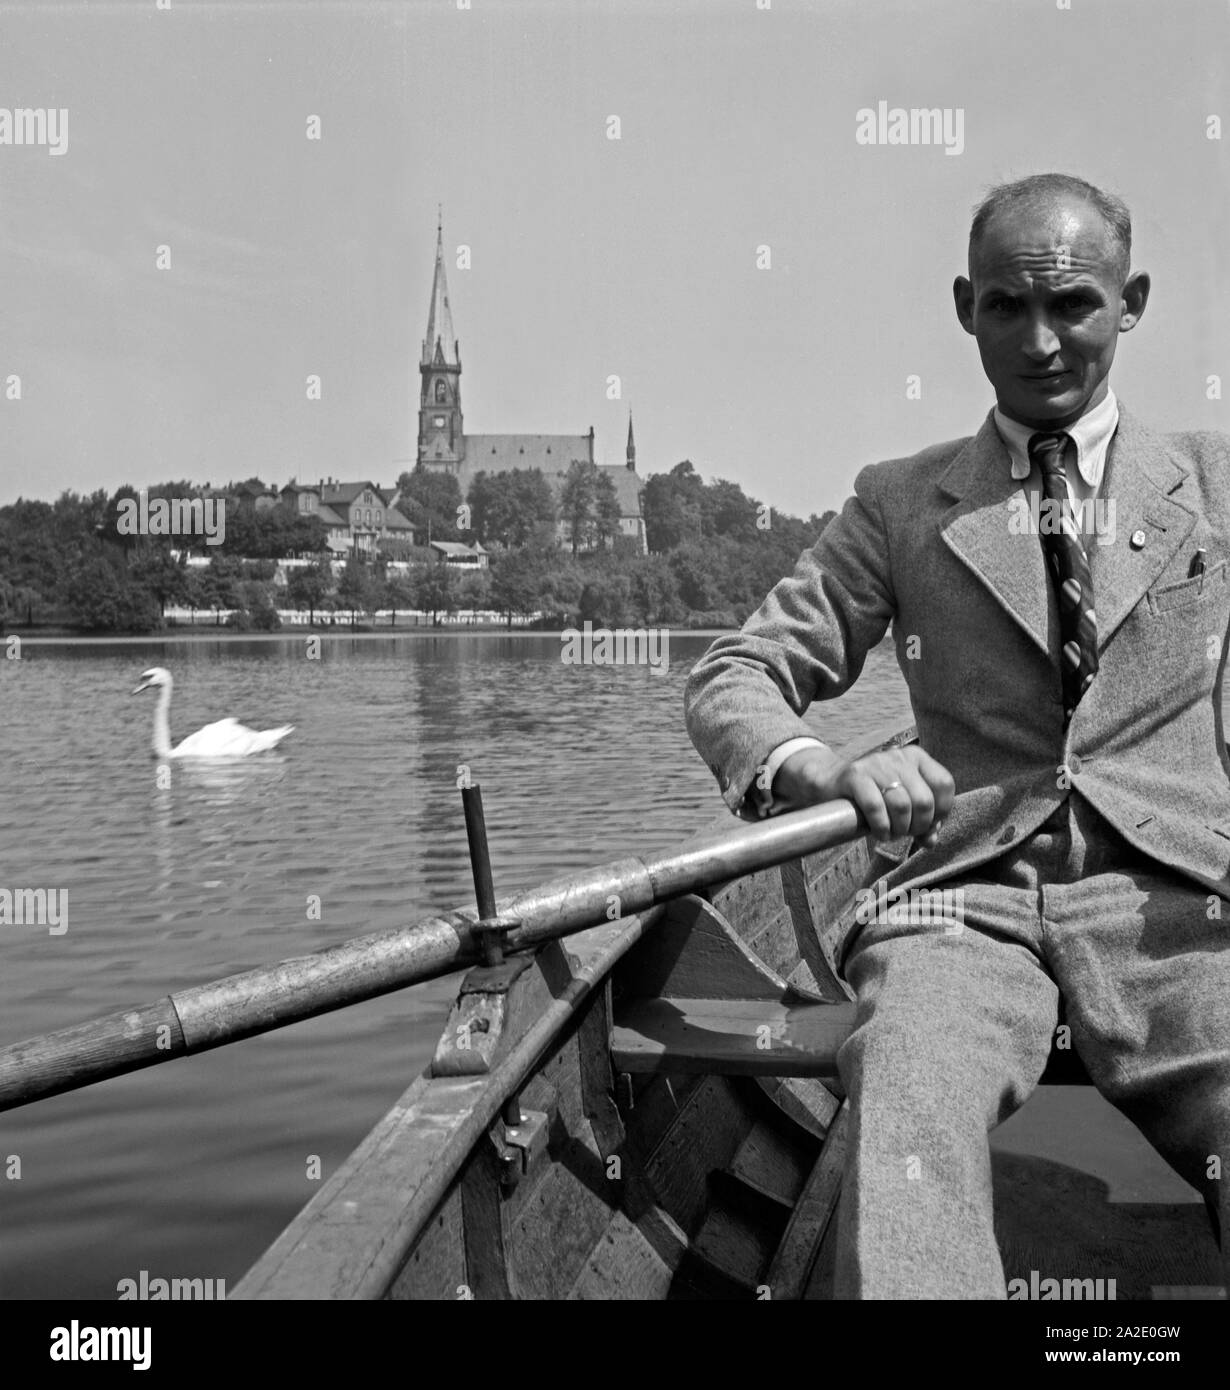 Ein Mann in einem Ruderboot auf dem Schloßteich à Chemnitz, Allemagne Allemagne Années 1930 er Jahre. Un homme un bateau à rames sur le lac Schlossteich à Chemnitz, Allemagne 1930. Banque D'Images